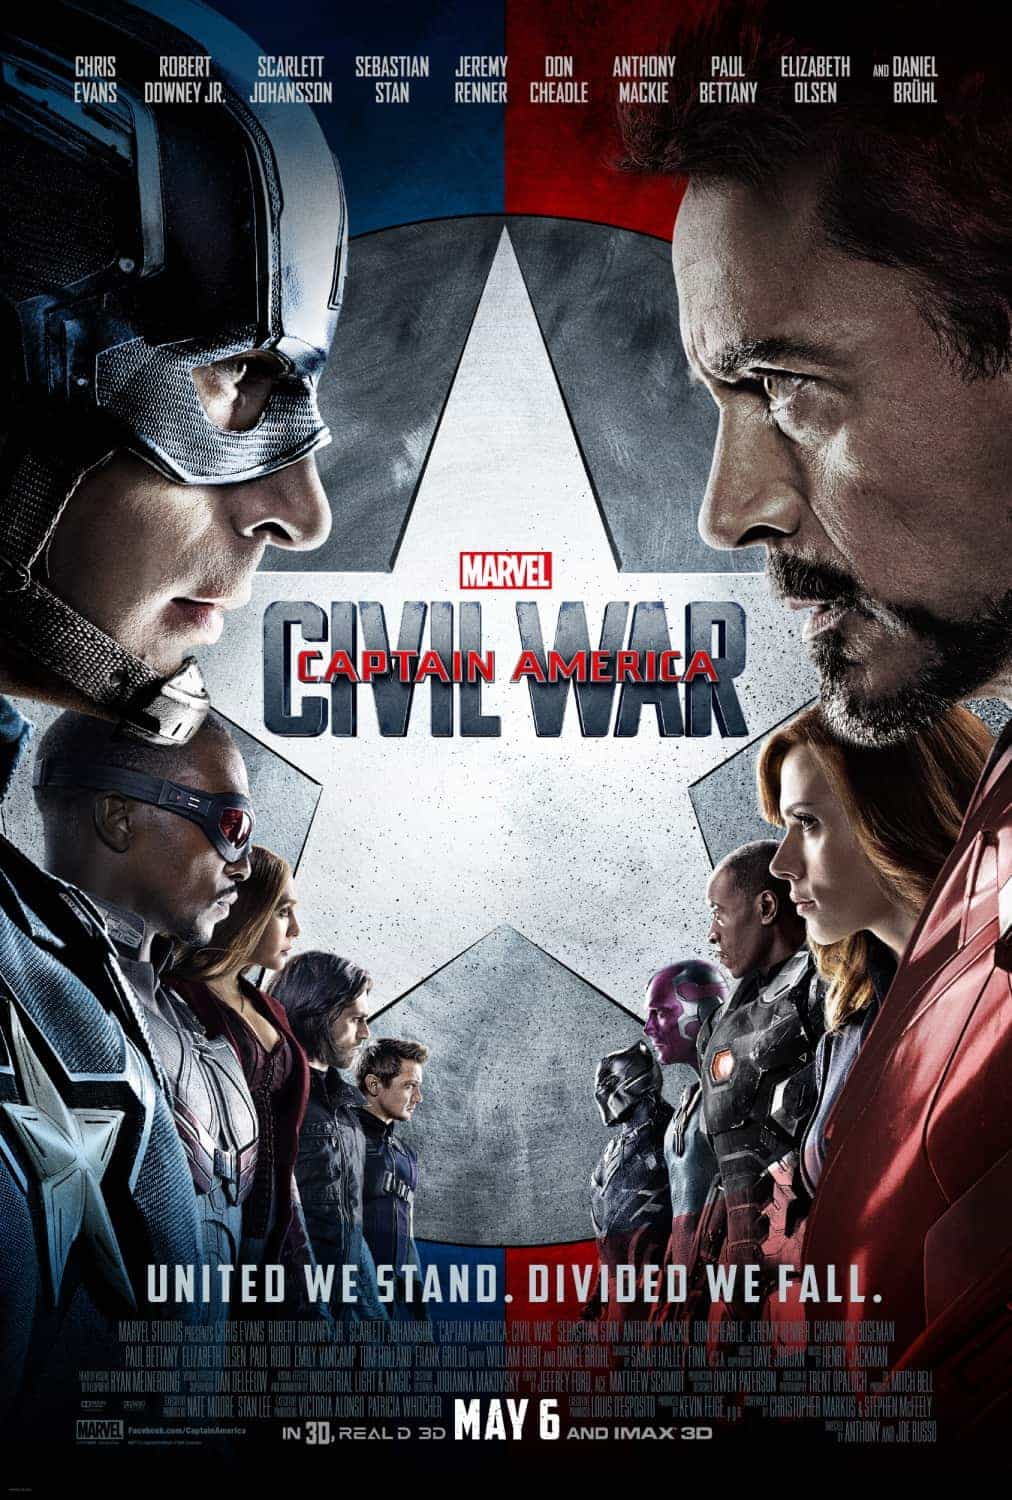 Captain America V Iron Man in first trailer for Civil War